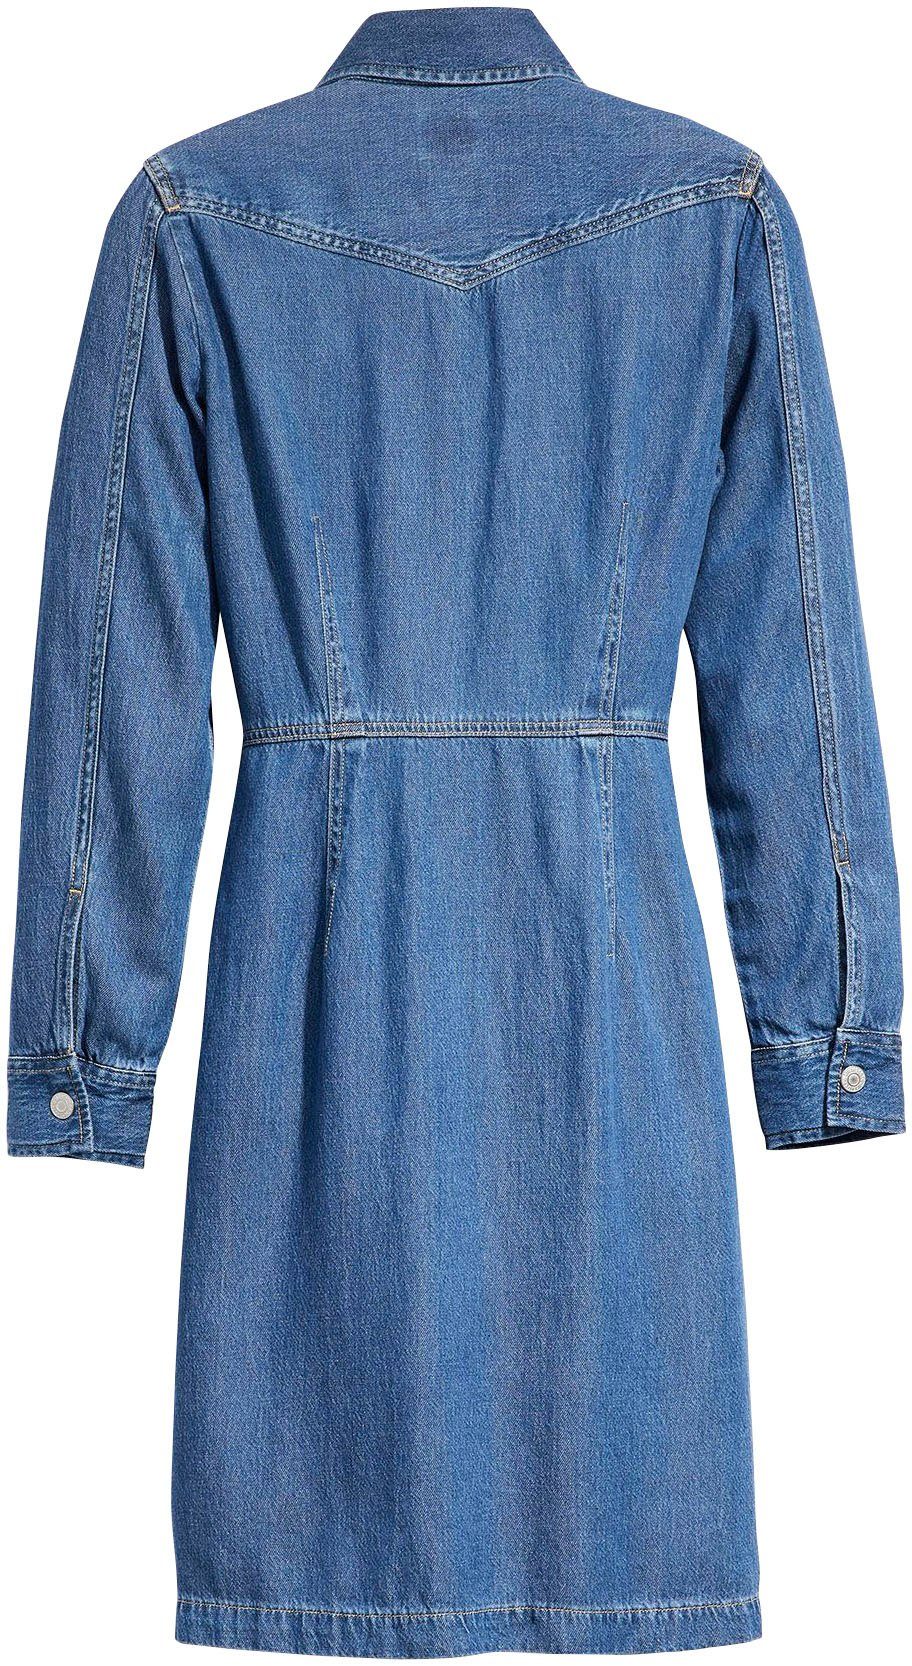 OTTO WESTERN DRESS Levi's® im Jeanskleid Westernlook blue klassischen